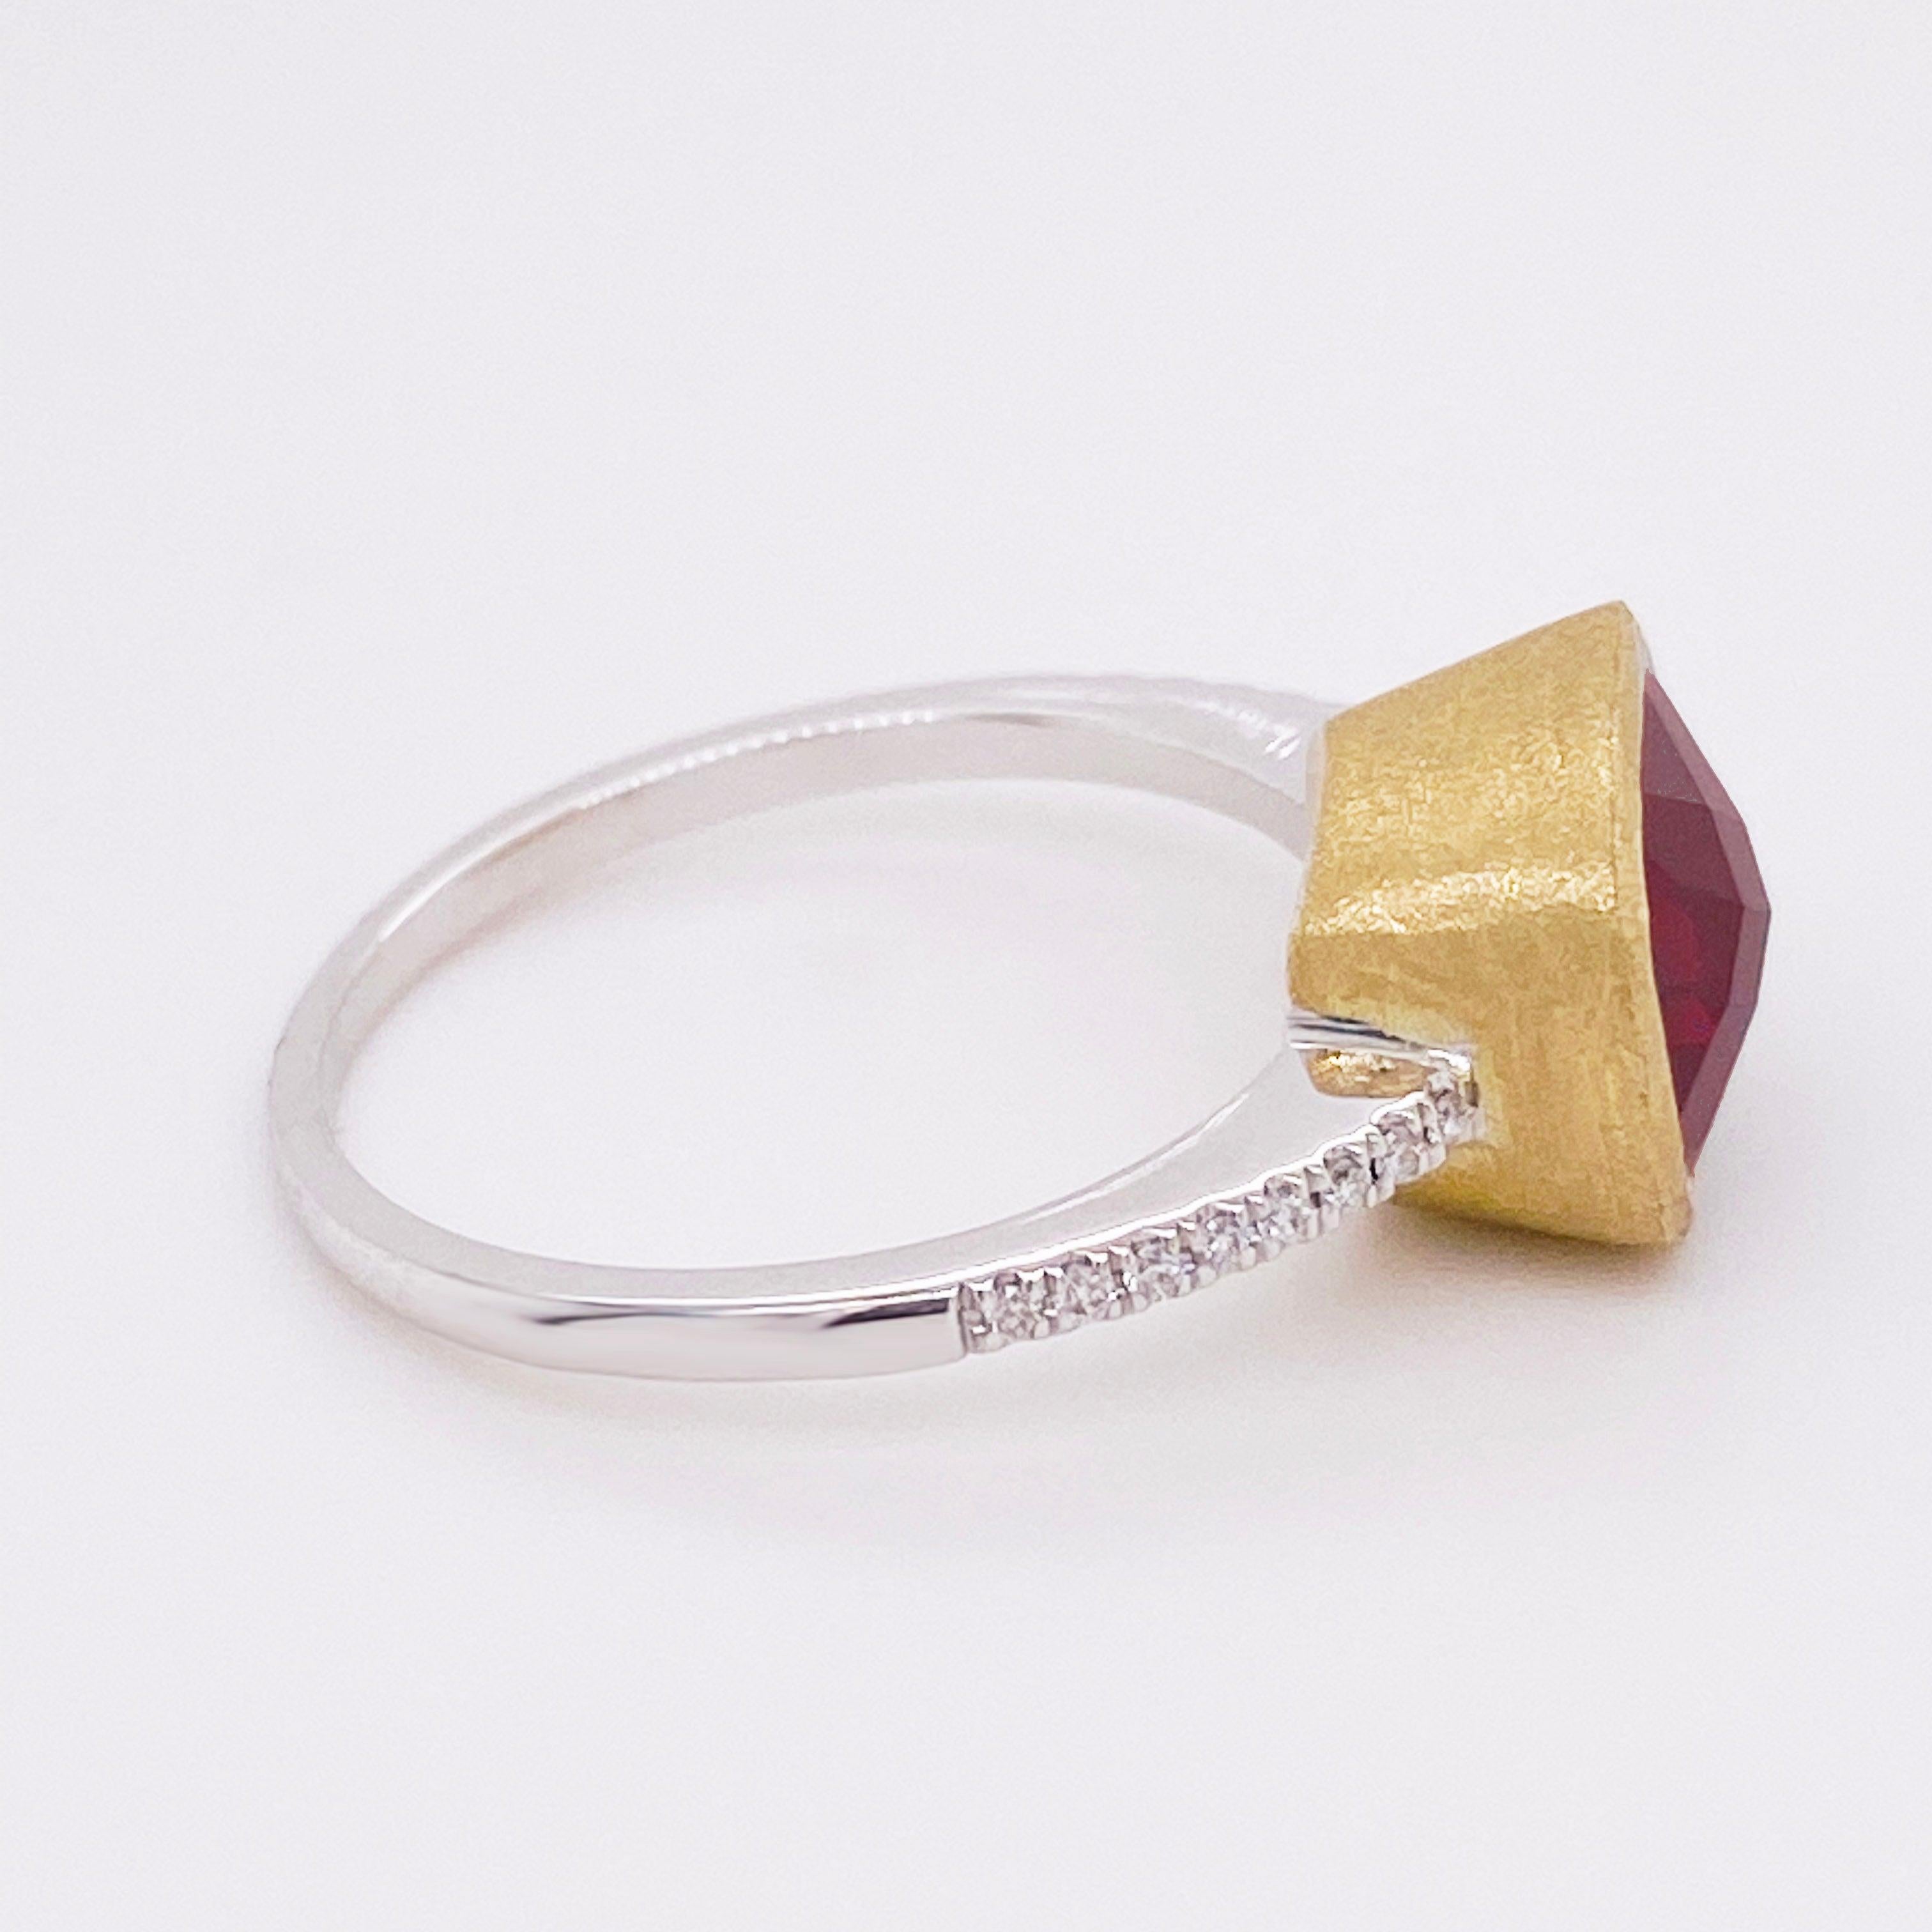 For Sale:  Garnet Diamond Ring, Red Garnet, Mixed Metal, 14k White and Yellow Gold, Satin 3